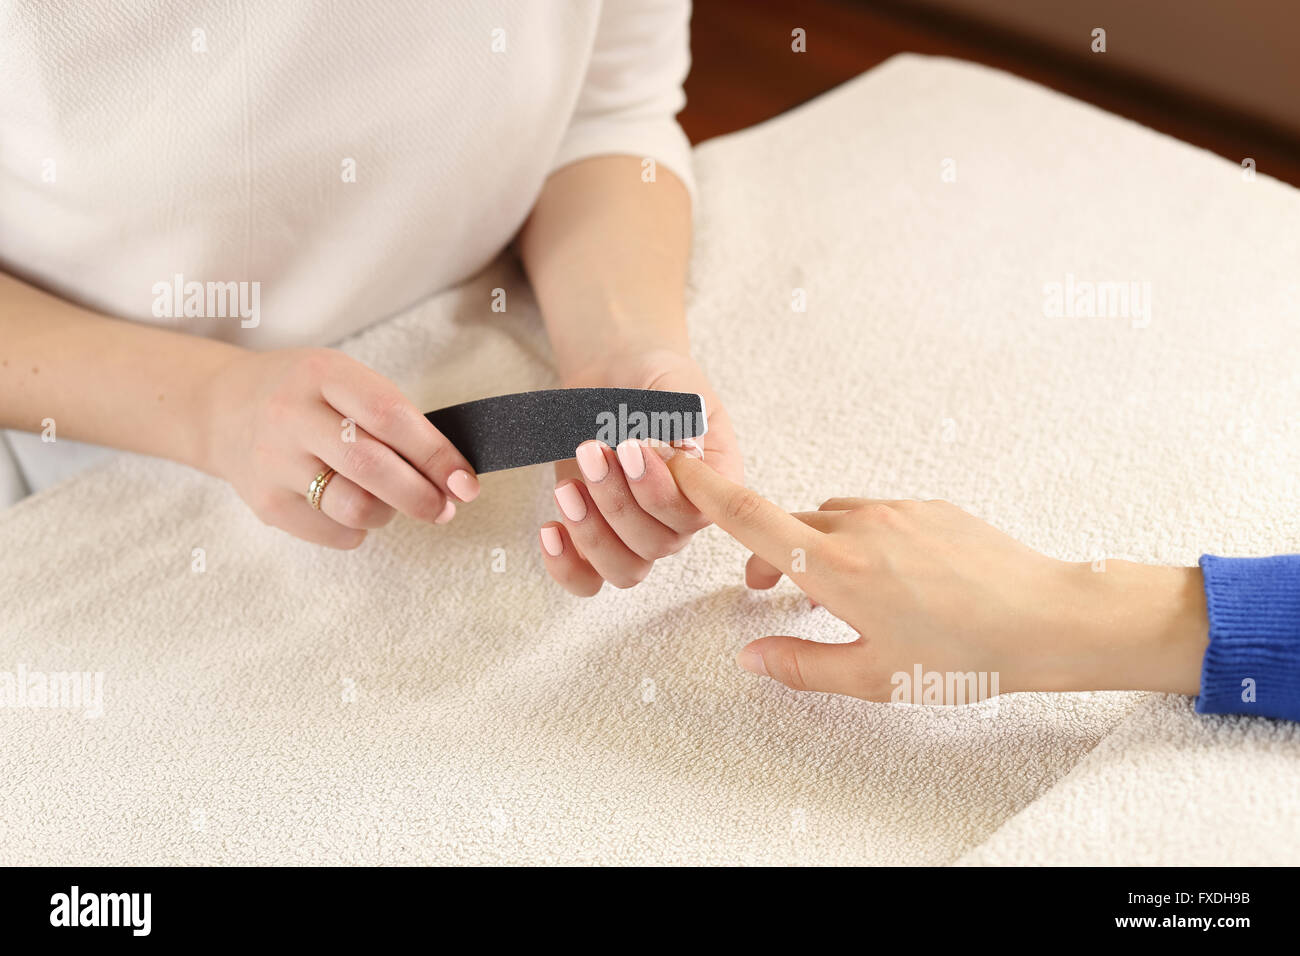 Filing nails process in spa salon Stock Photo